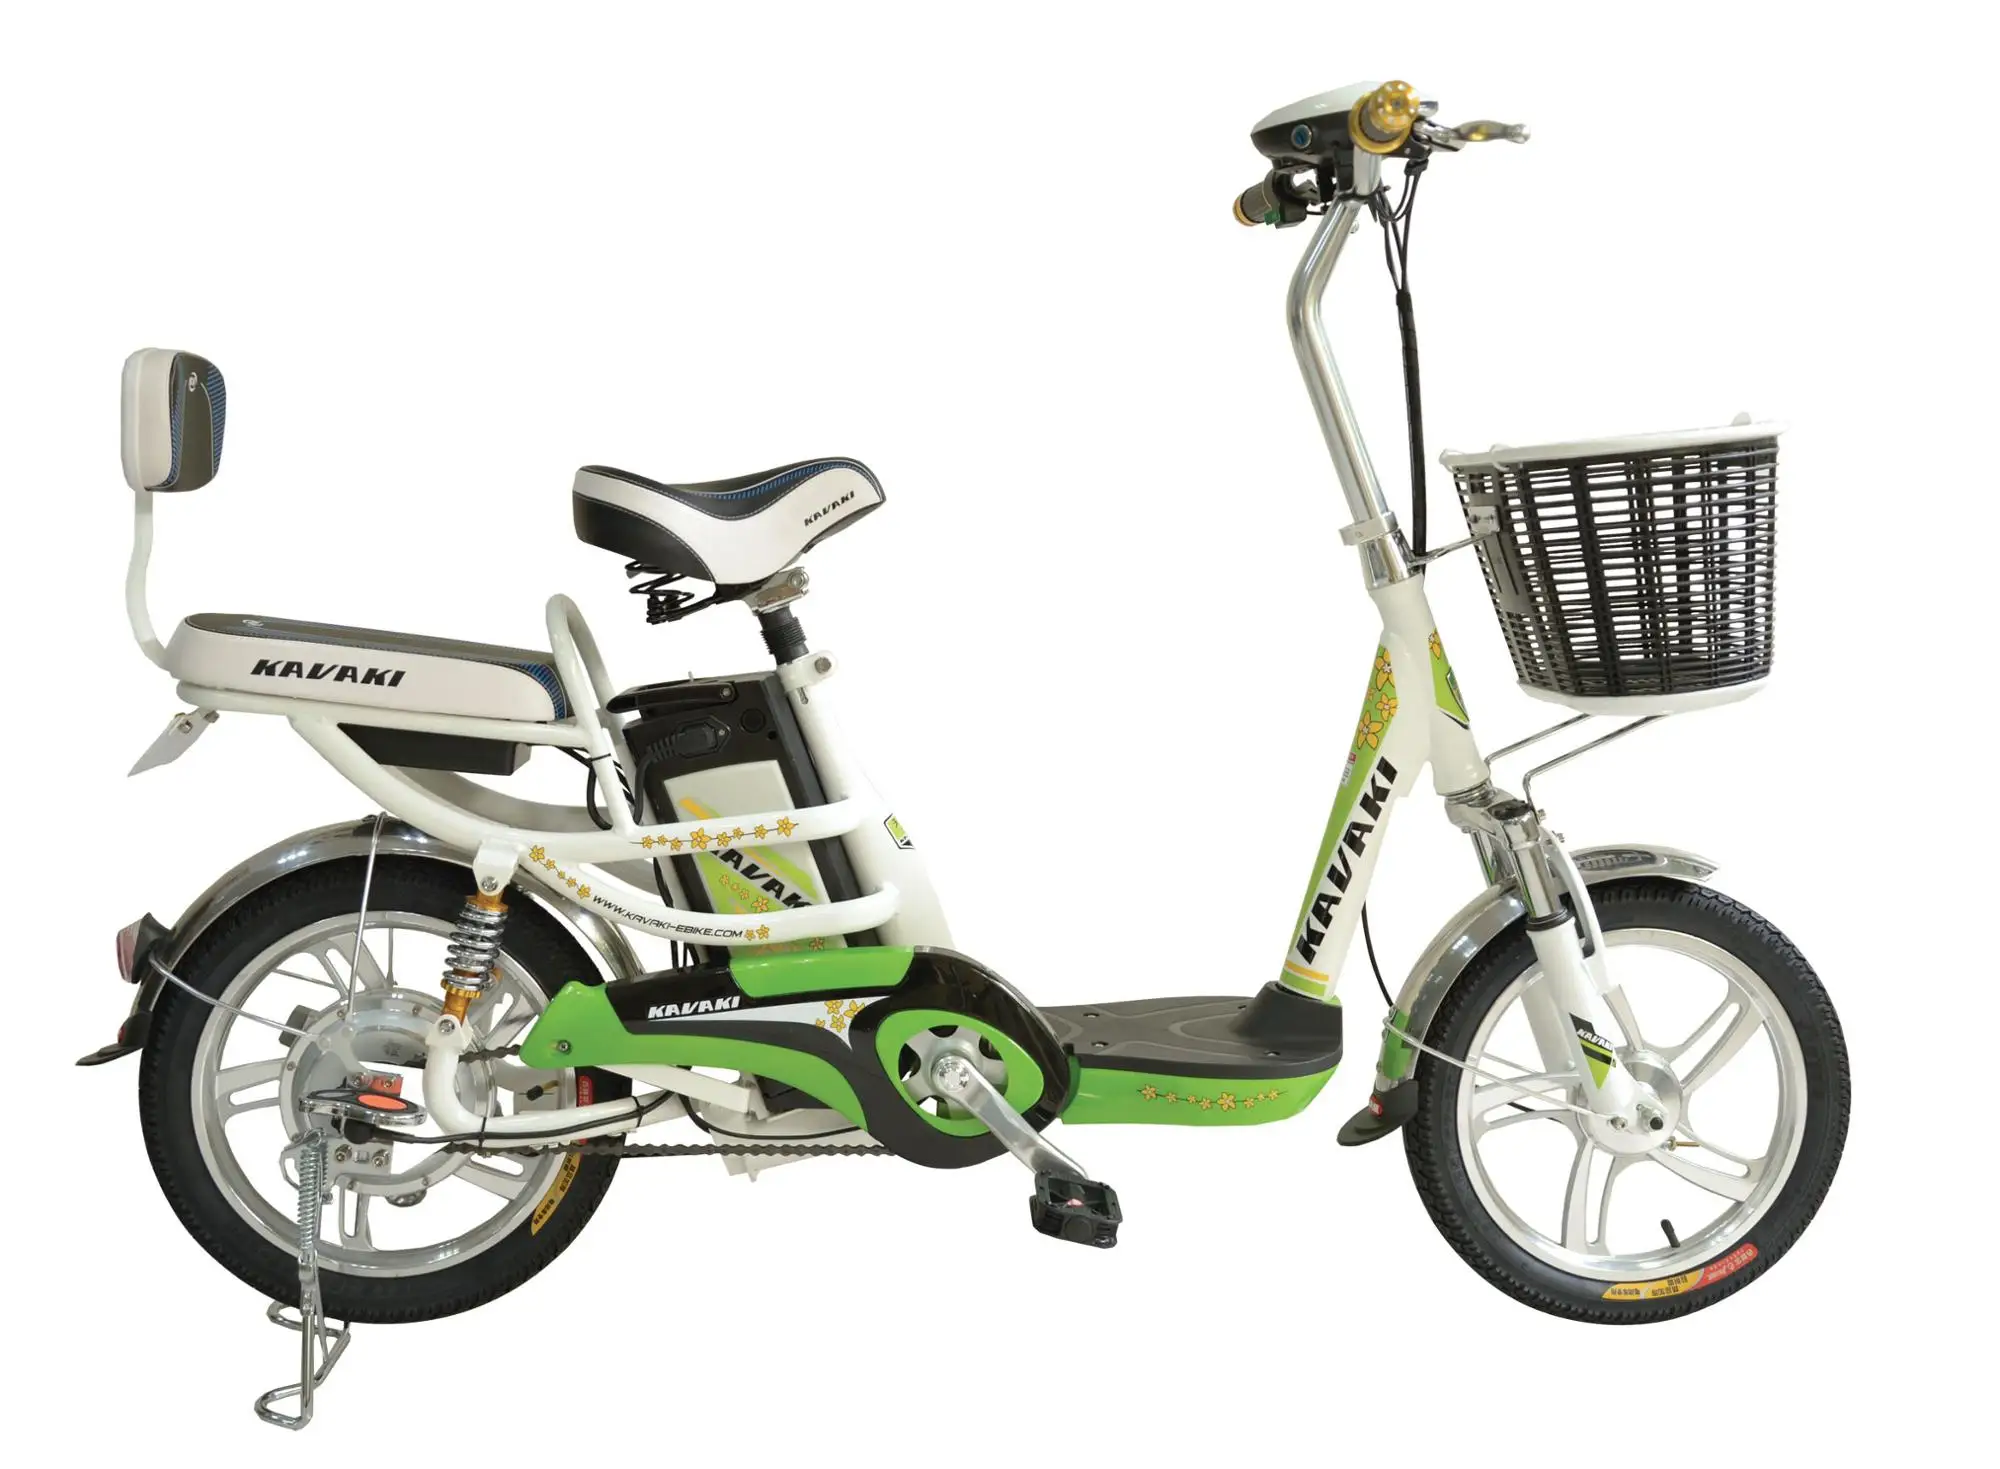 Kavaki Export Two Wheel Bike 36v8ah Battery Electric Bike For 2 People ... - HTB1BtXMBfiSBuNkSnhJq6zDcpXas